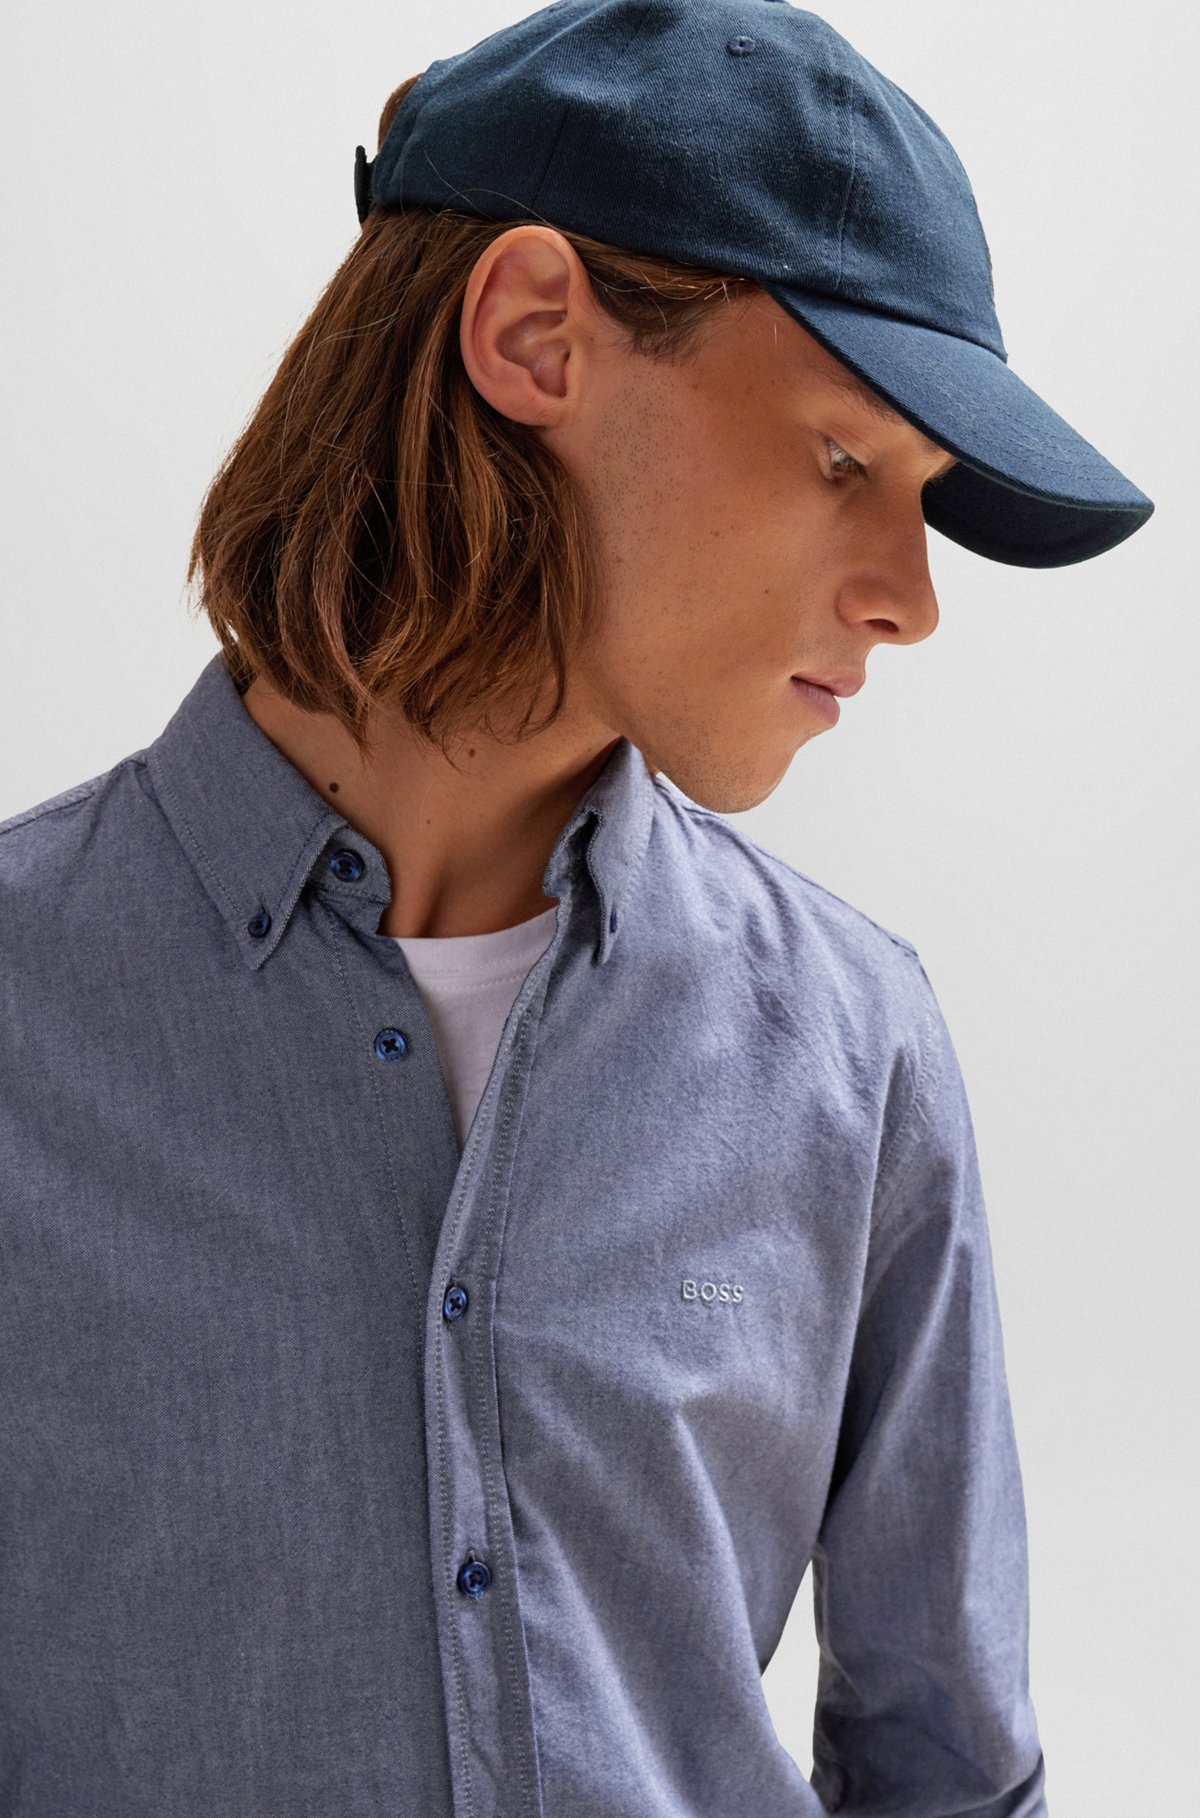 Cotton-twill cap with tonal logo patch, Dark Blue